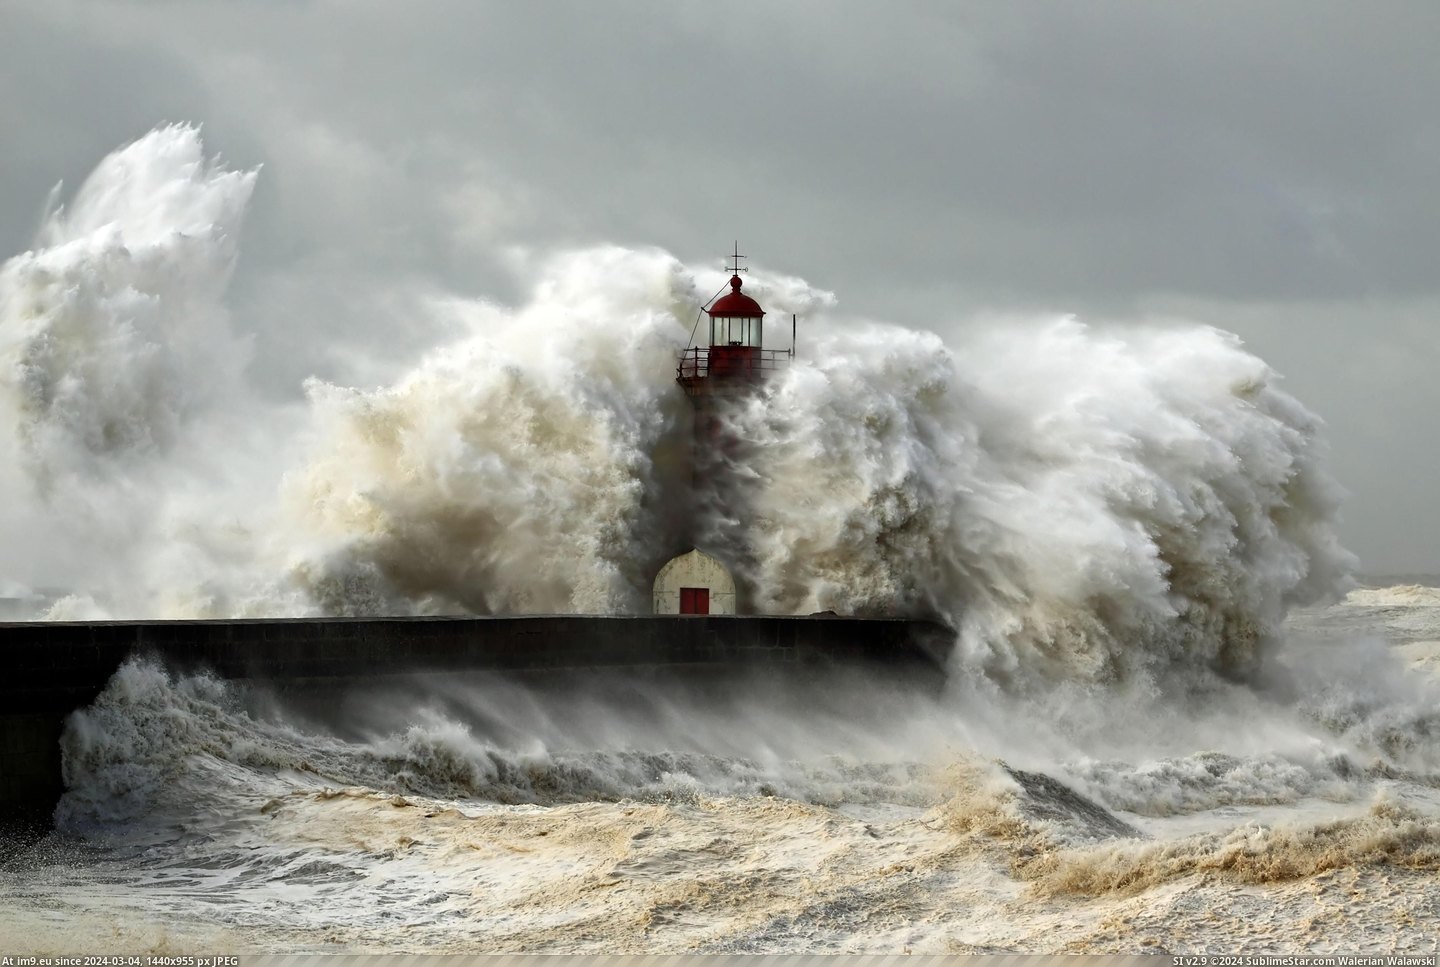 #Storm  #Lighthouse [Pics] Lighthouse in the Storm Pic. (Bild von album My r/PICS favs))